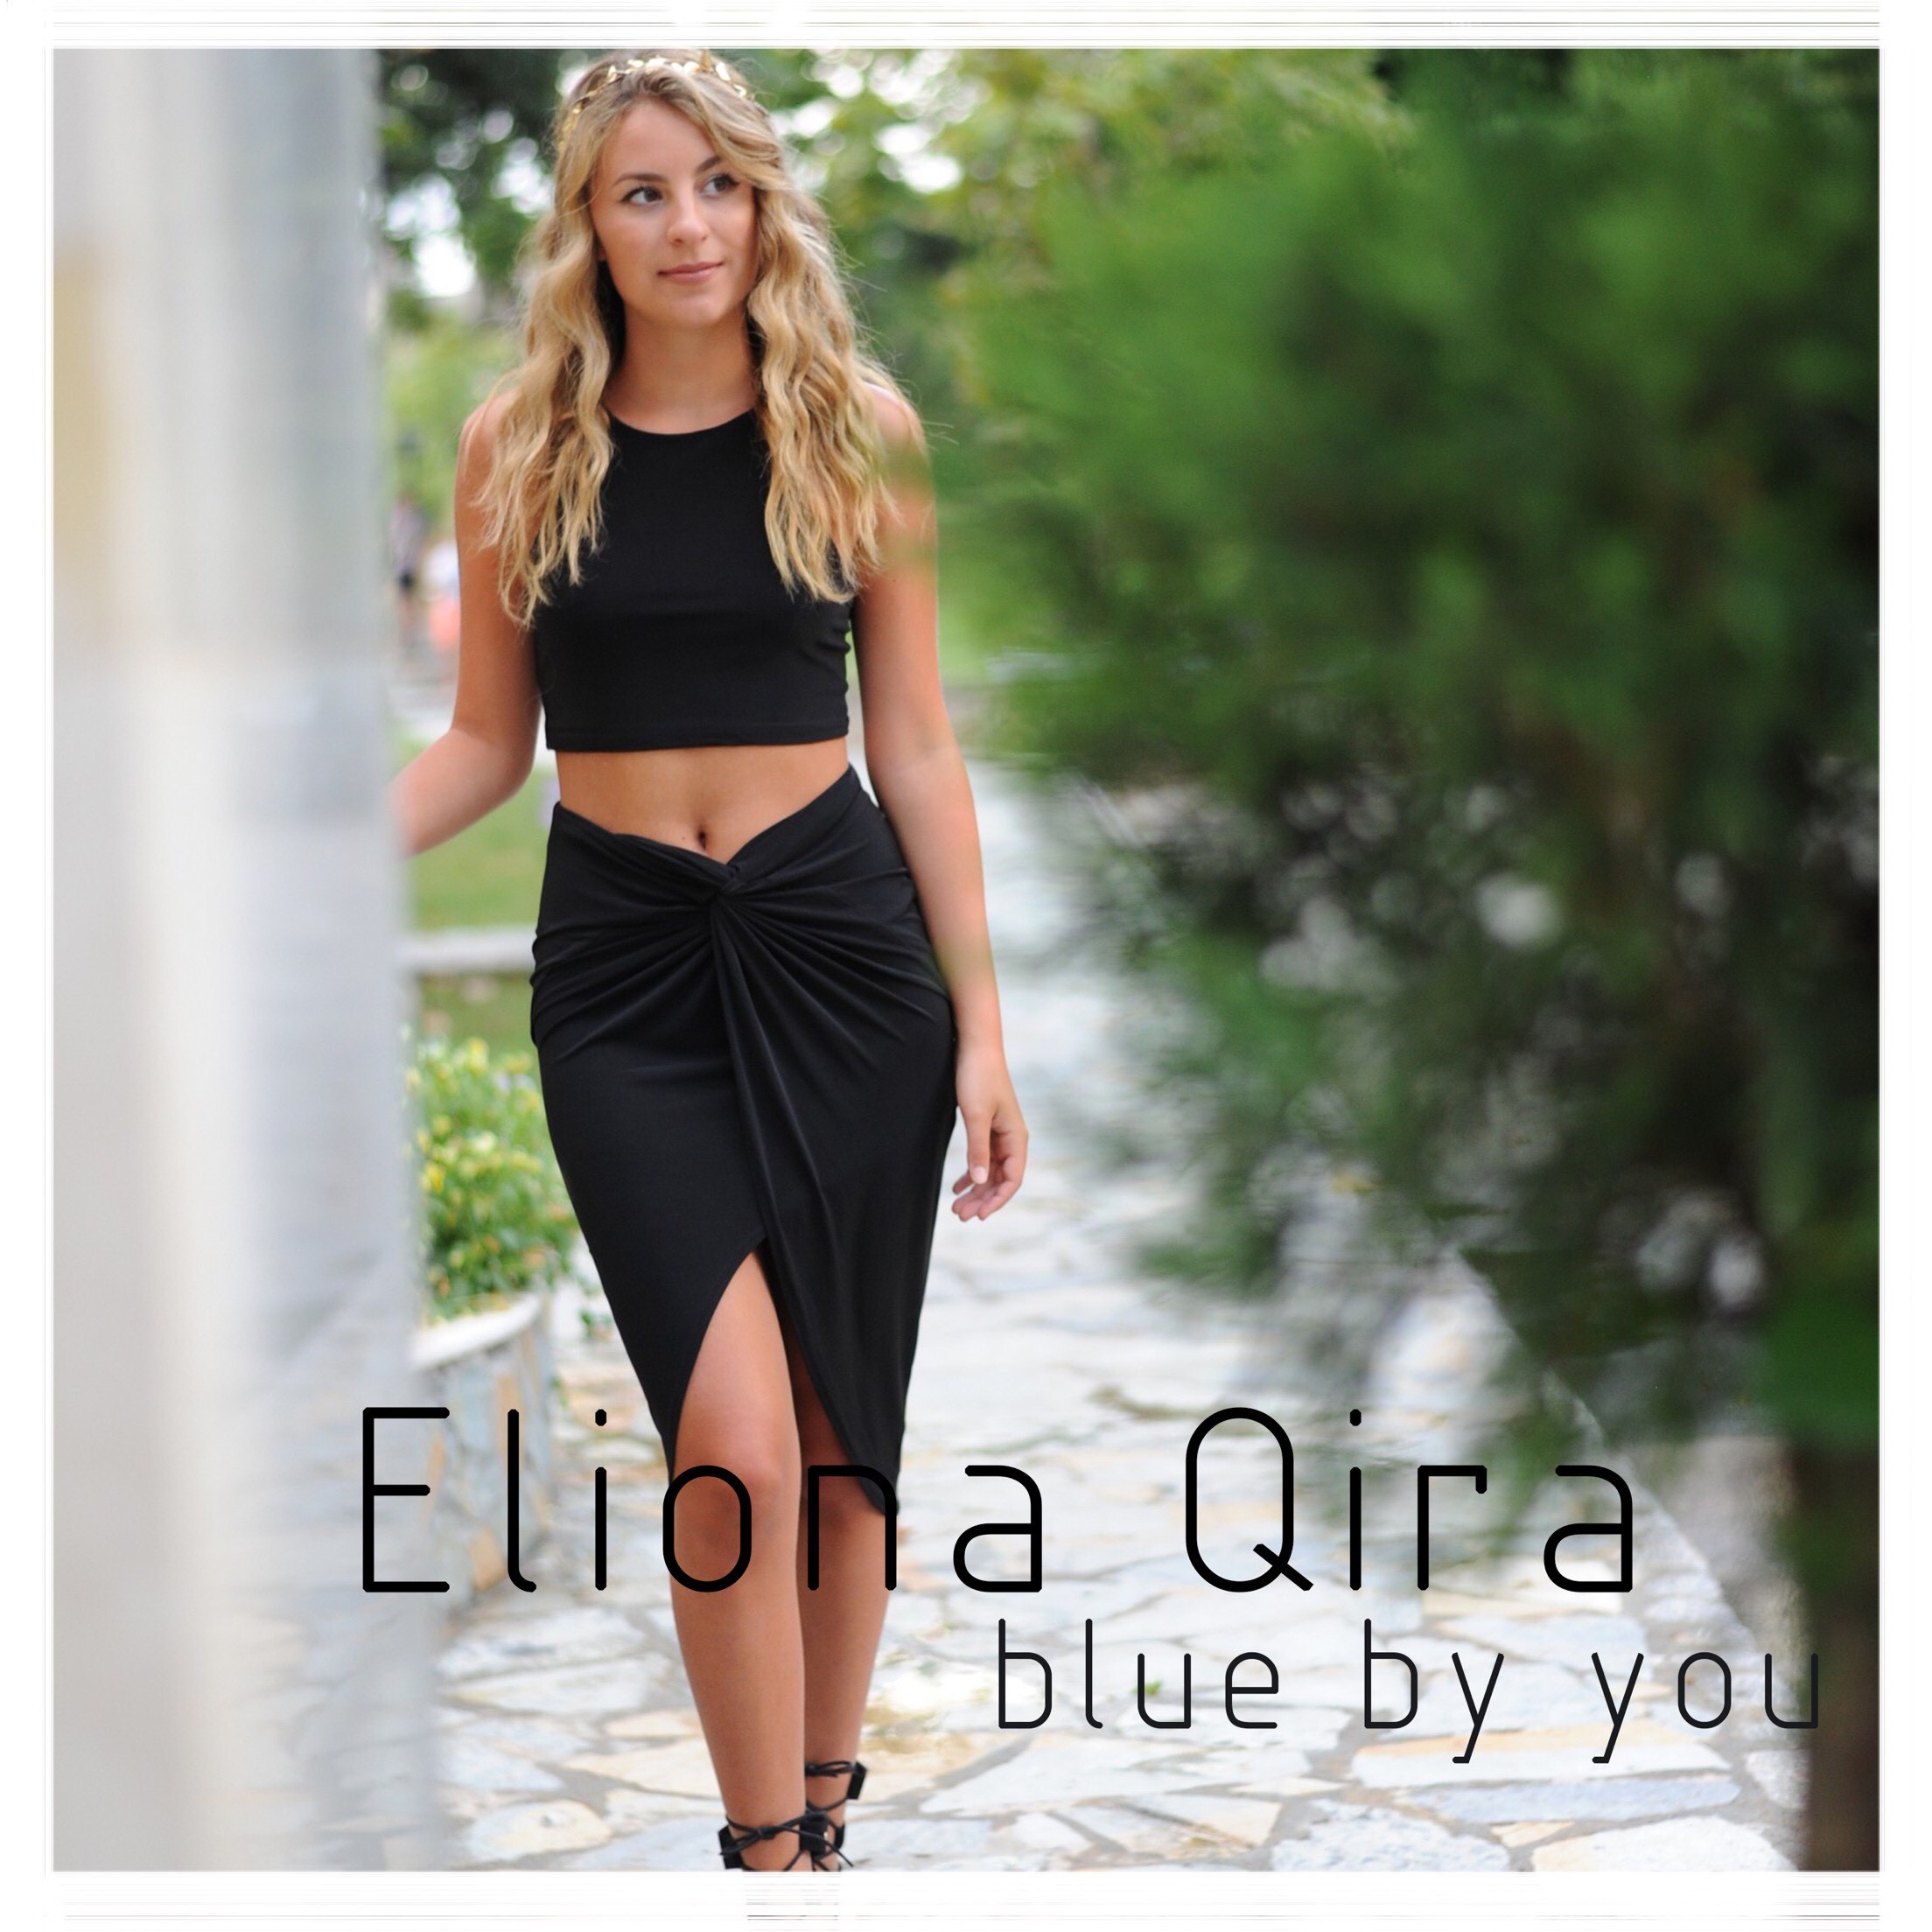 Eliona Qira